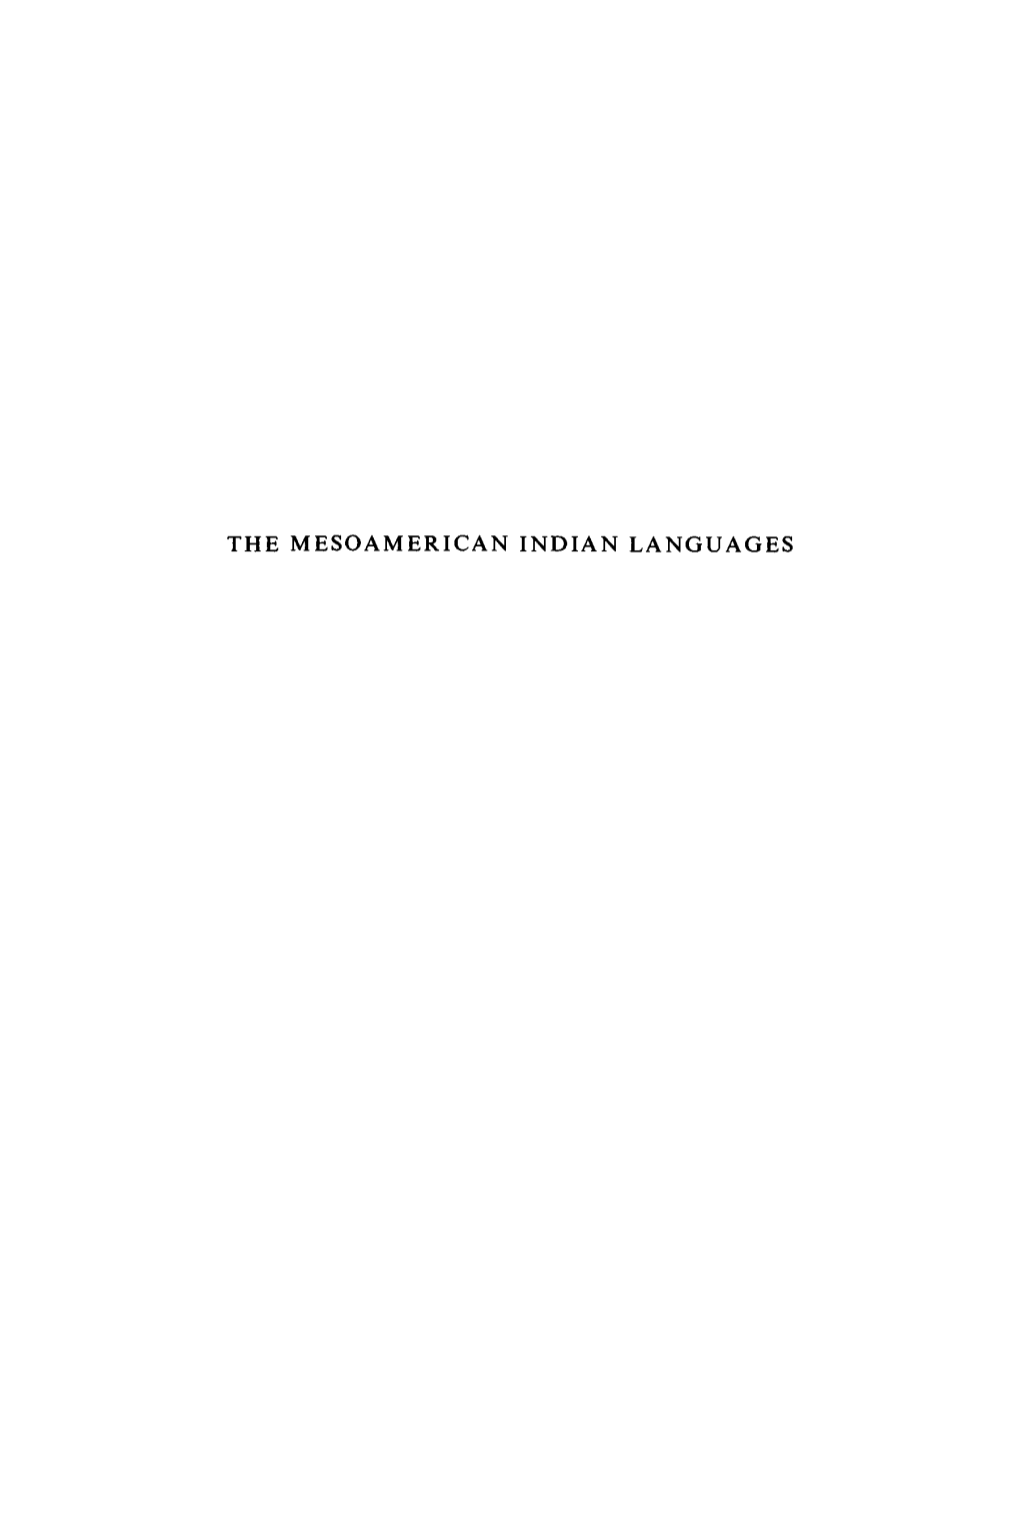 The Mesoamerican Indian Languages Cambridge Language Surveys